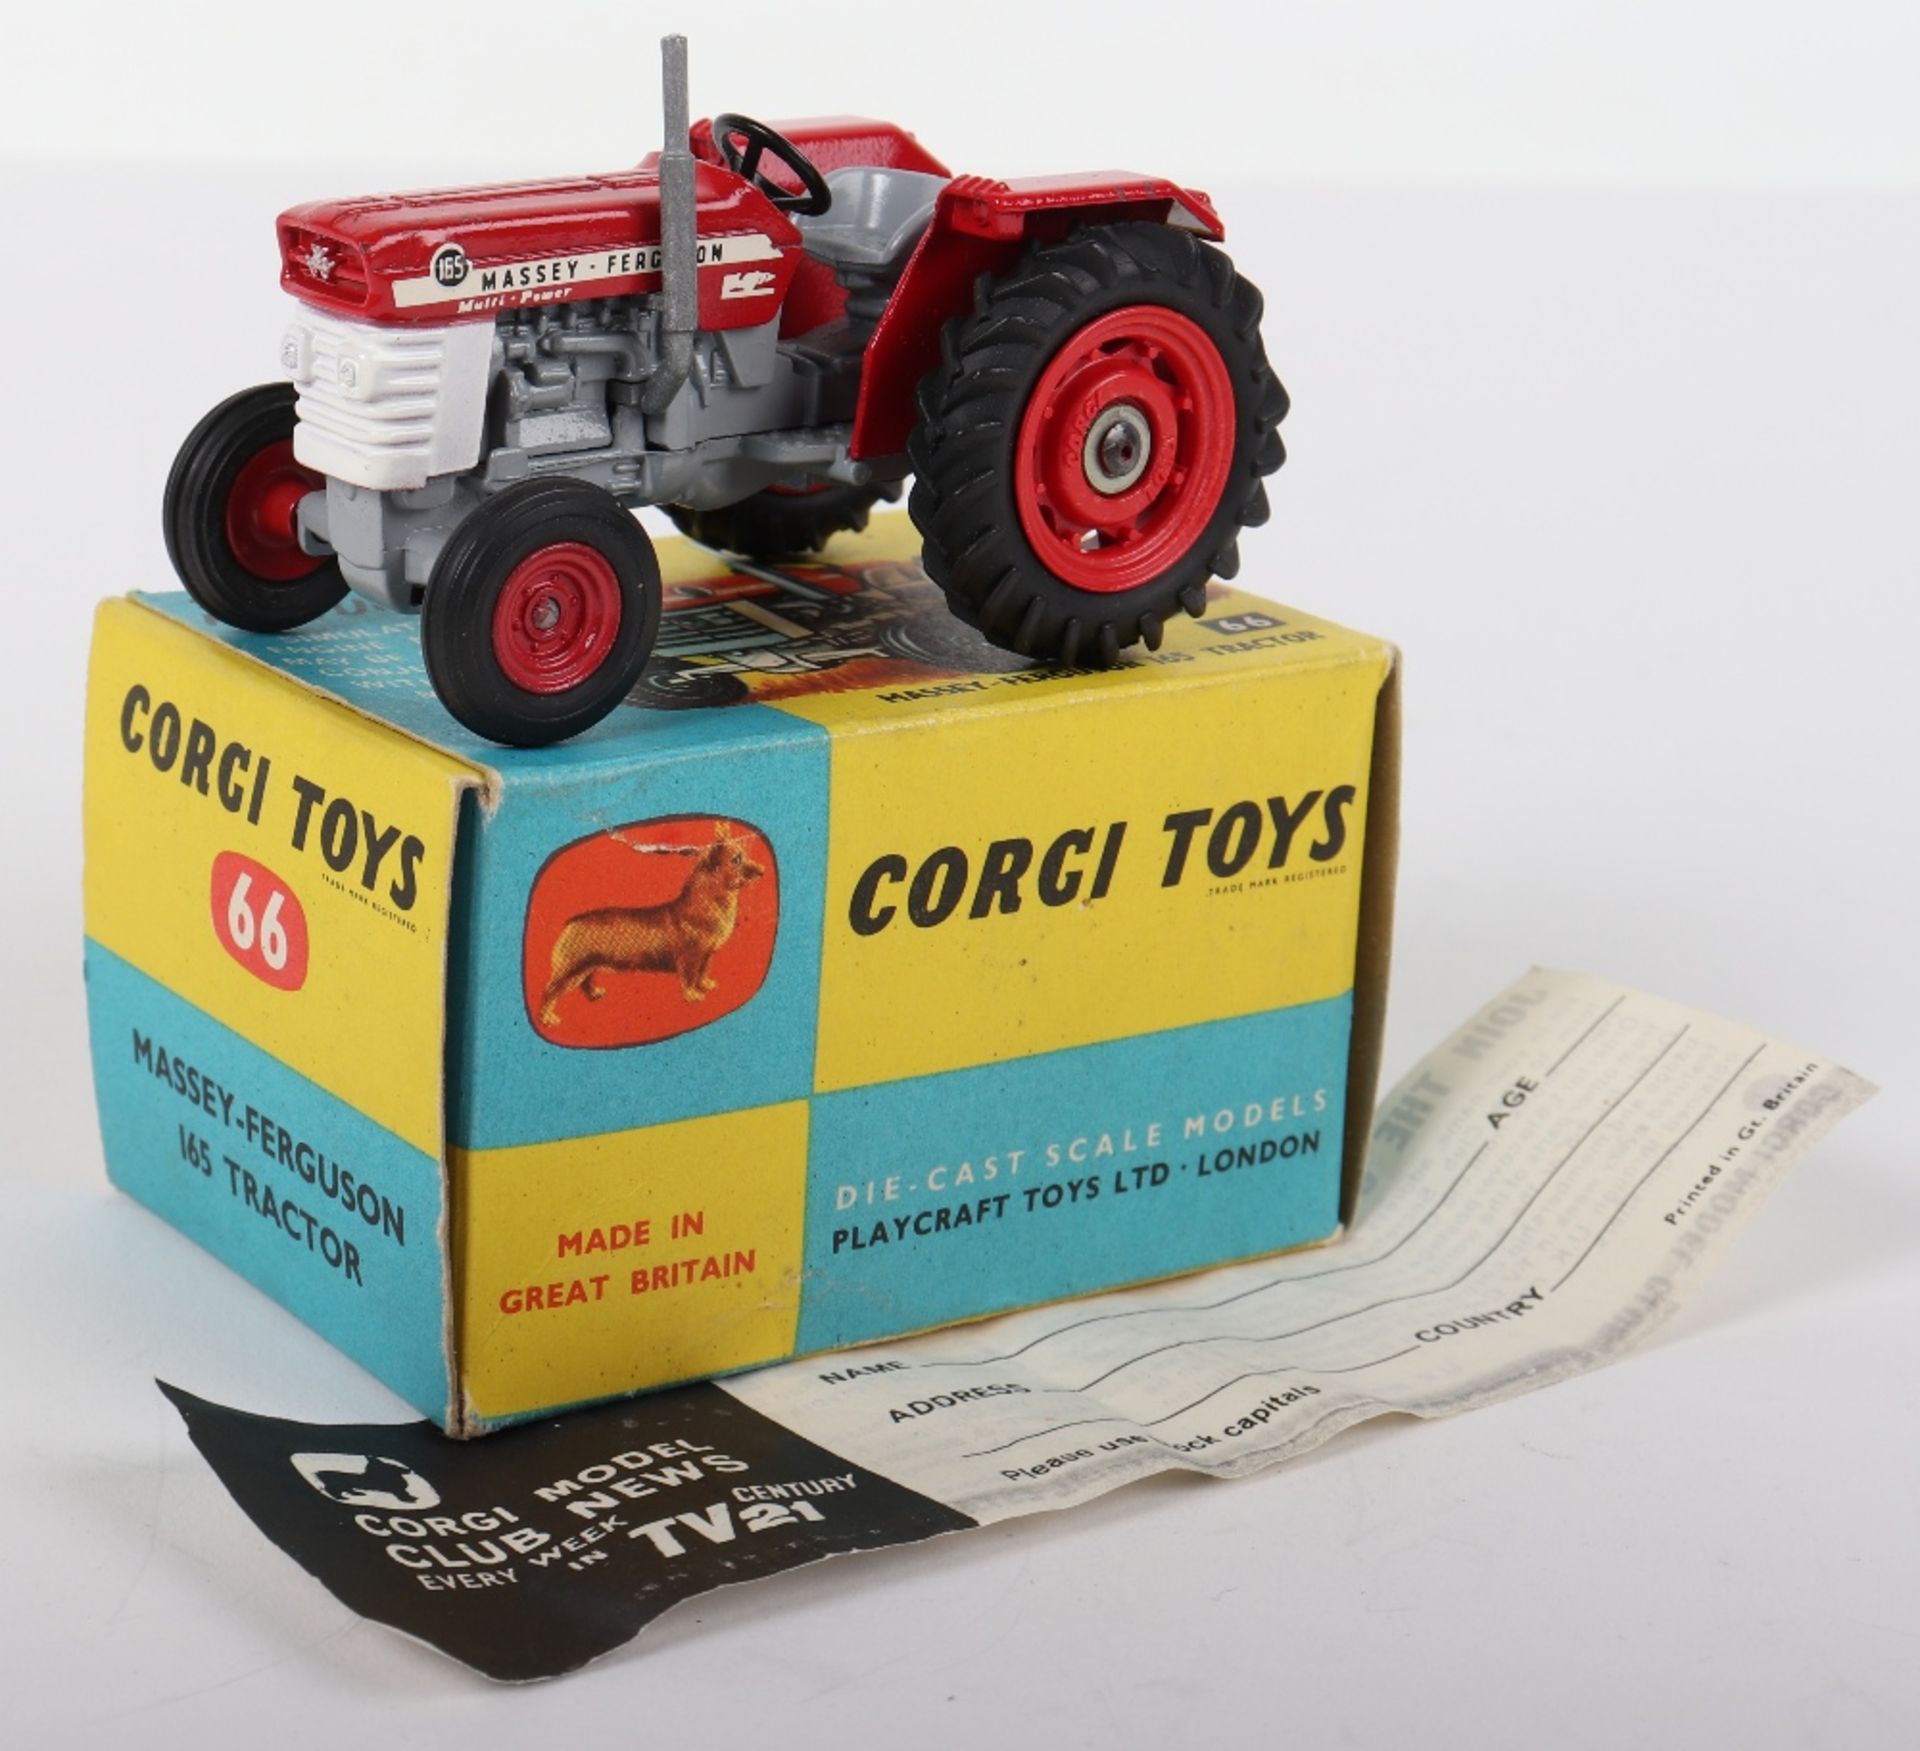 Corgi Toys 66 Massey Ferguson 165 Tractor - Image 2 of 3